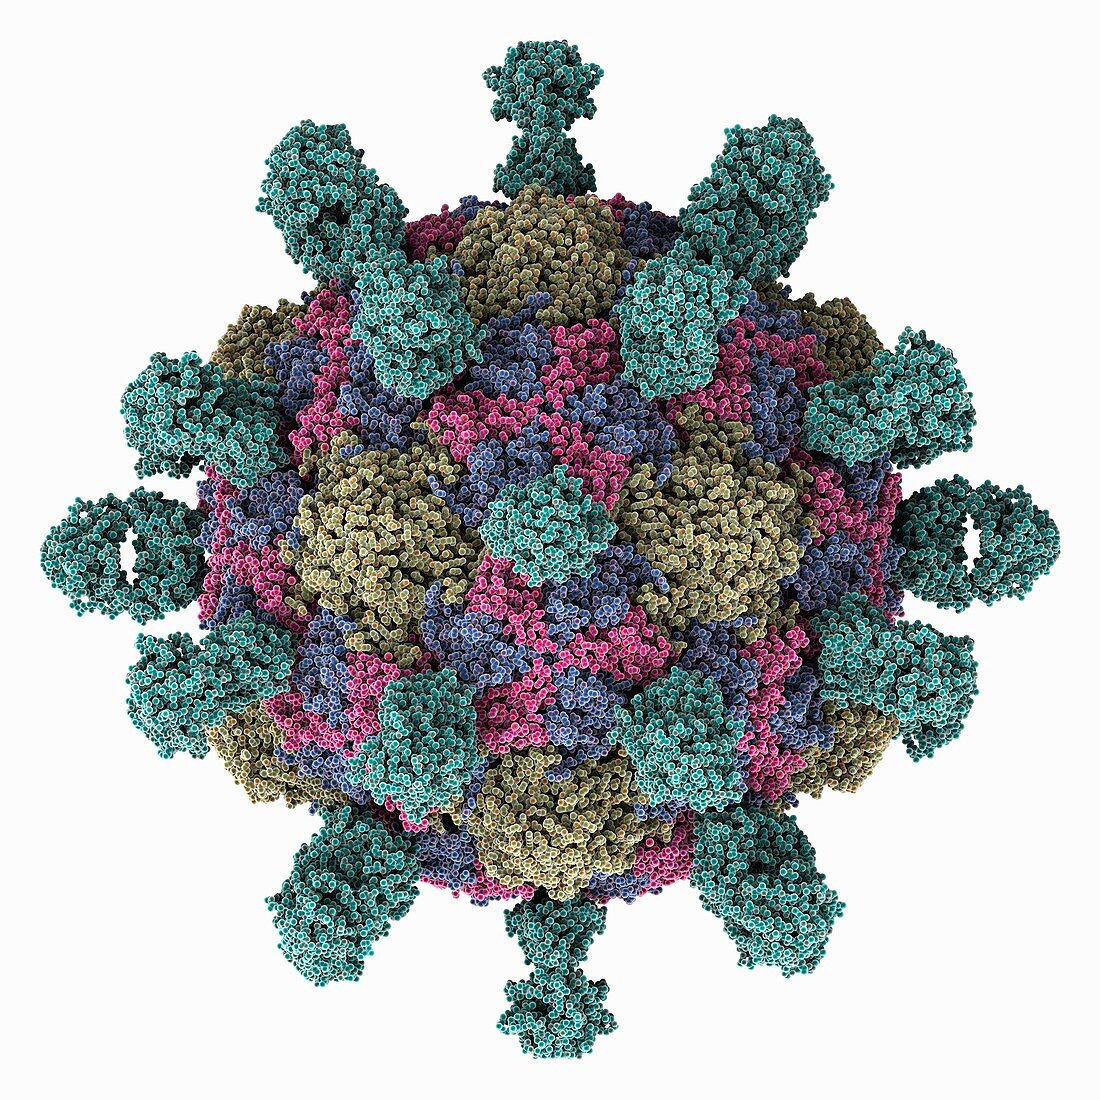 Poliovirus 1 Mahoney capsid, illustration